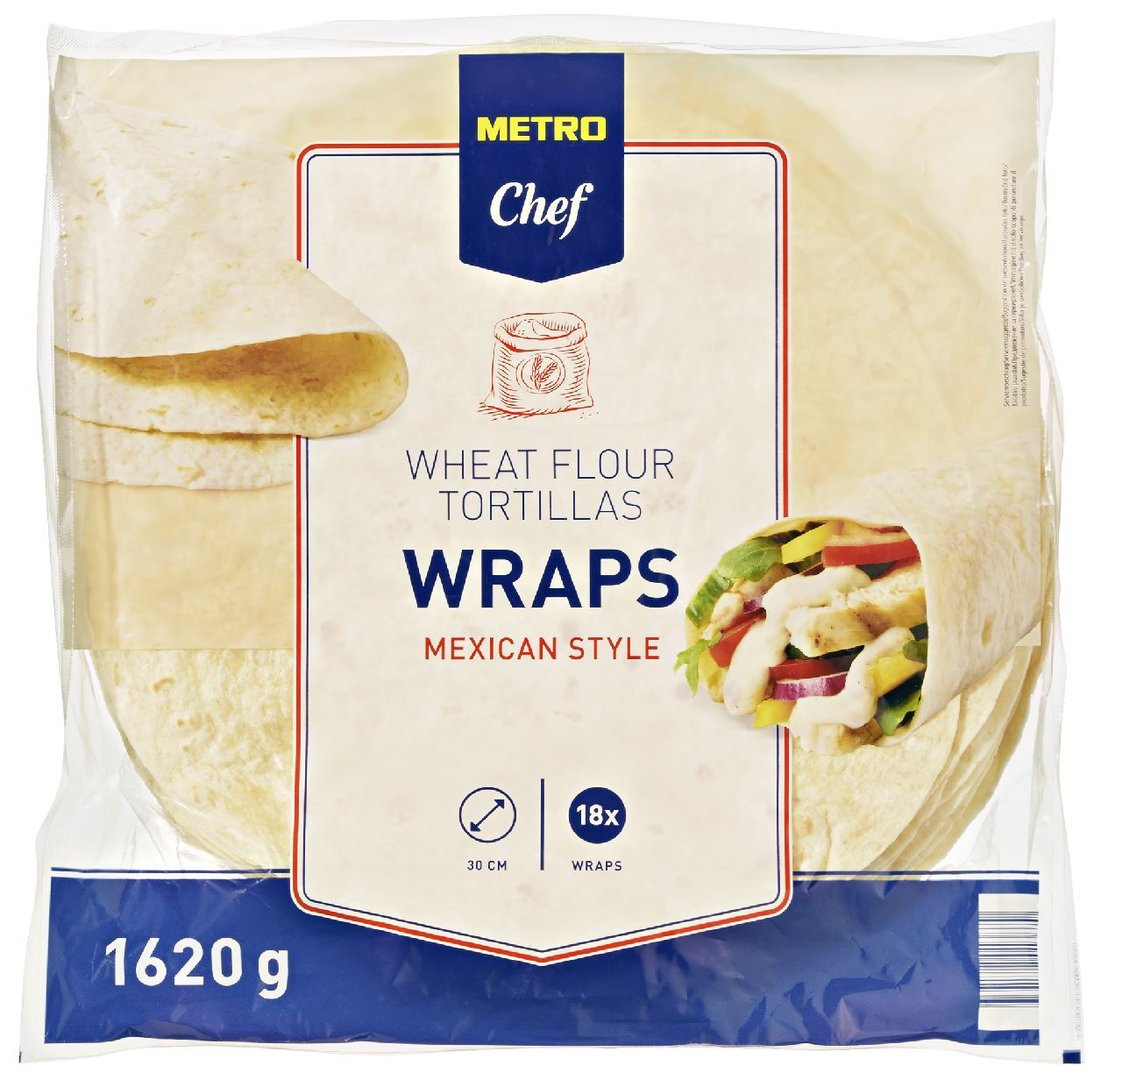 METRO Chef - Weizen Wraps Mexican Style Ø 30 cm 18 Stück - 1,62 kg Packung